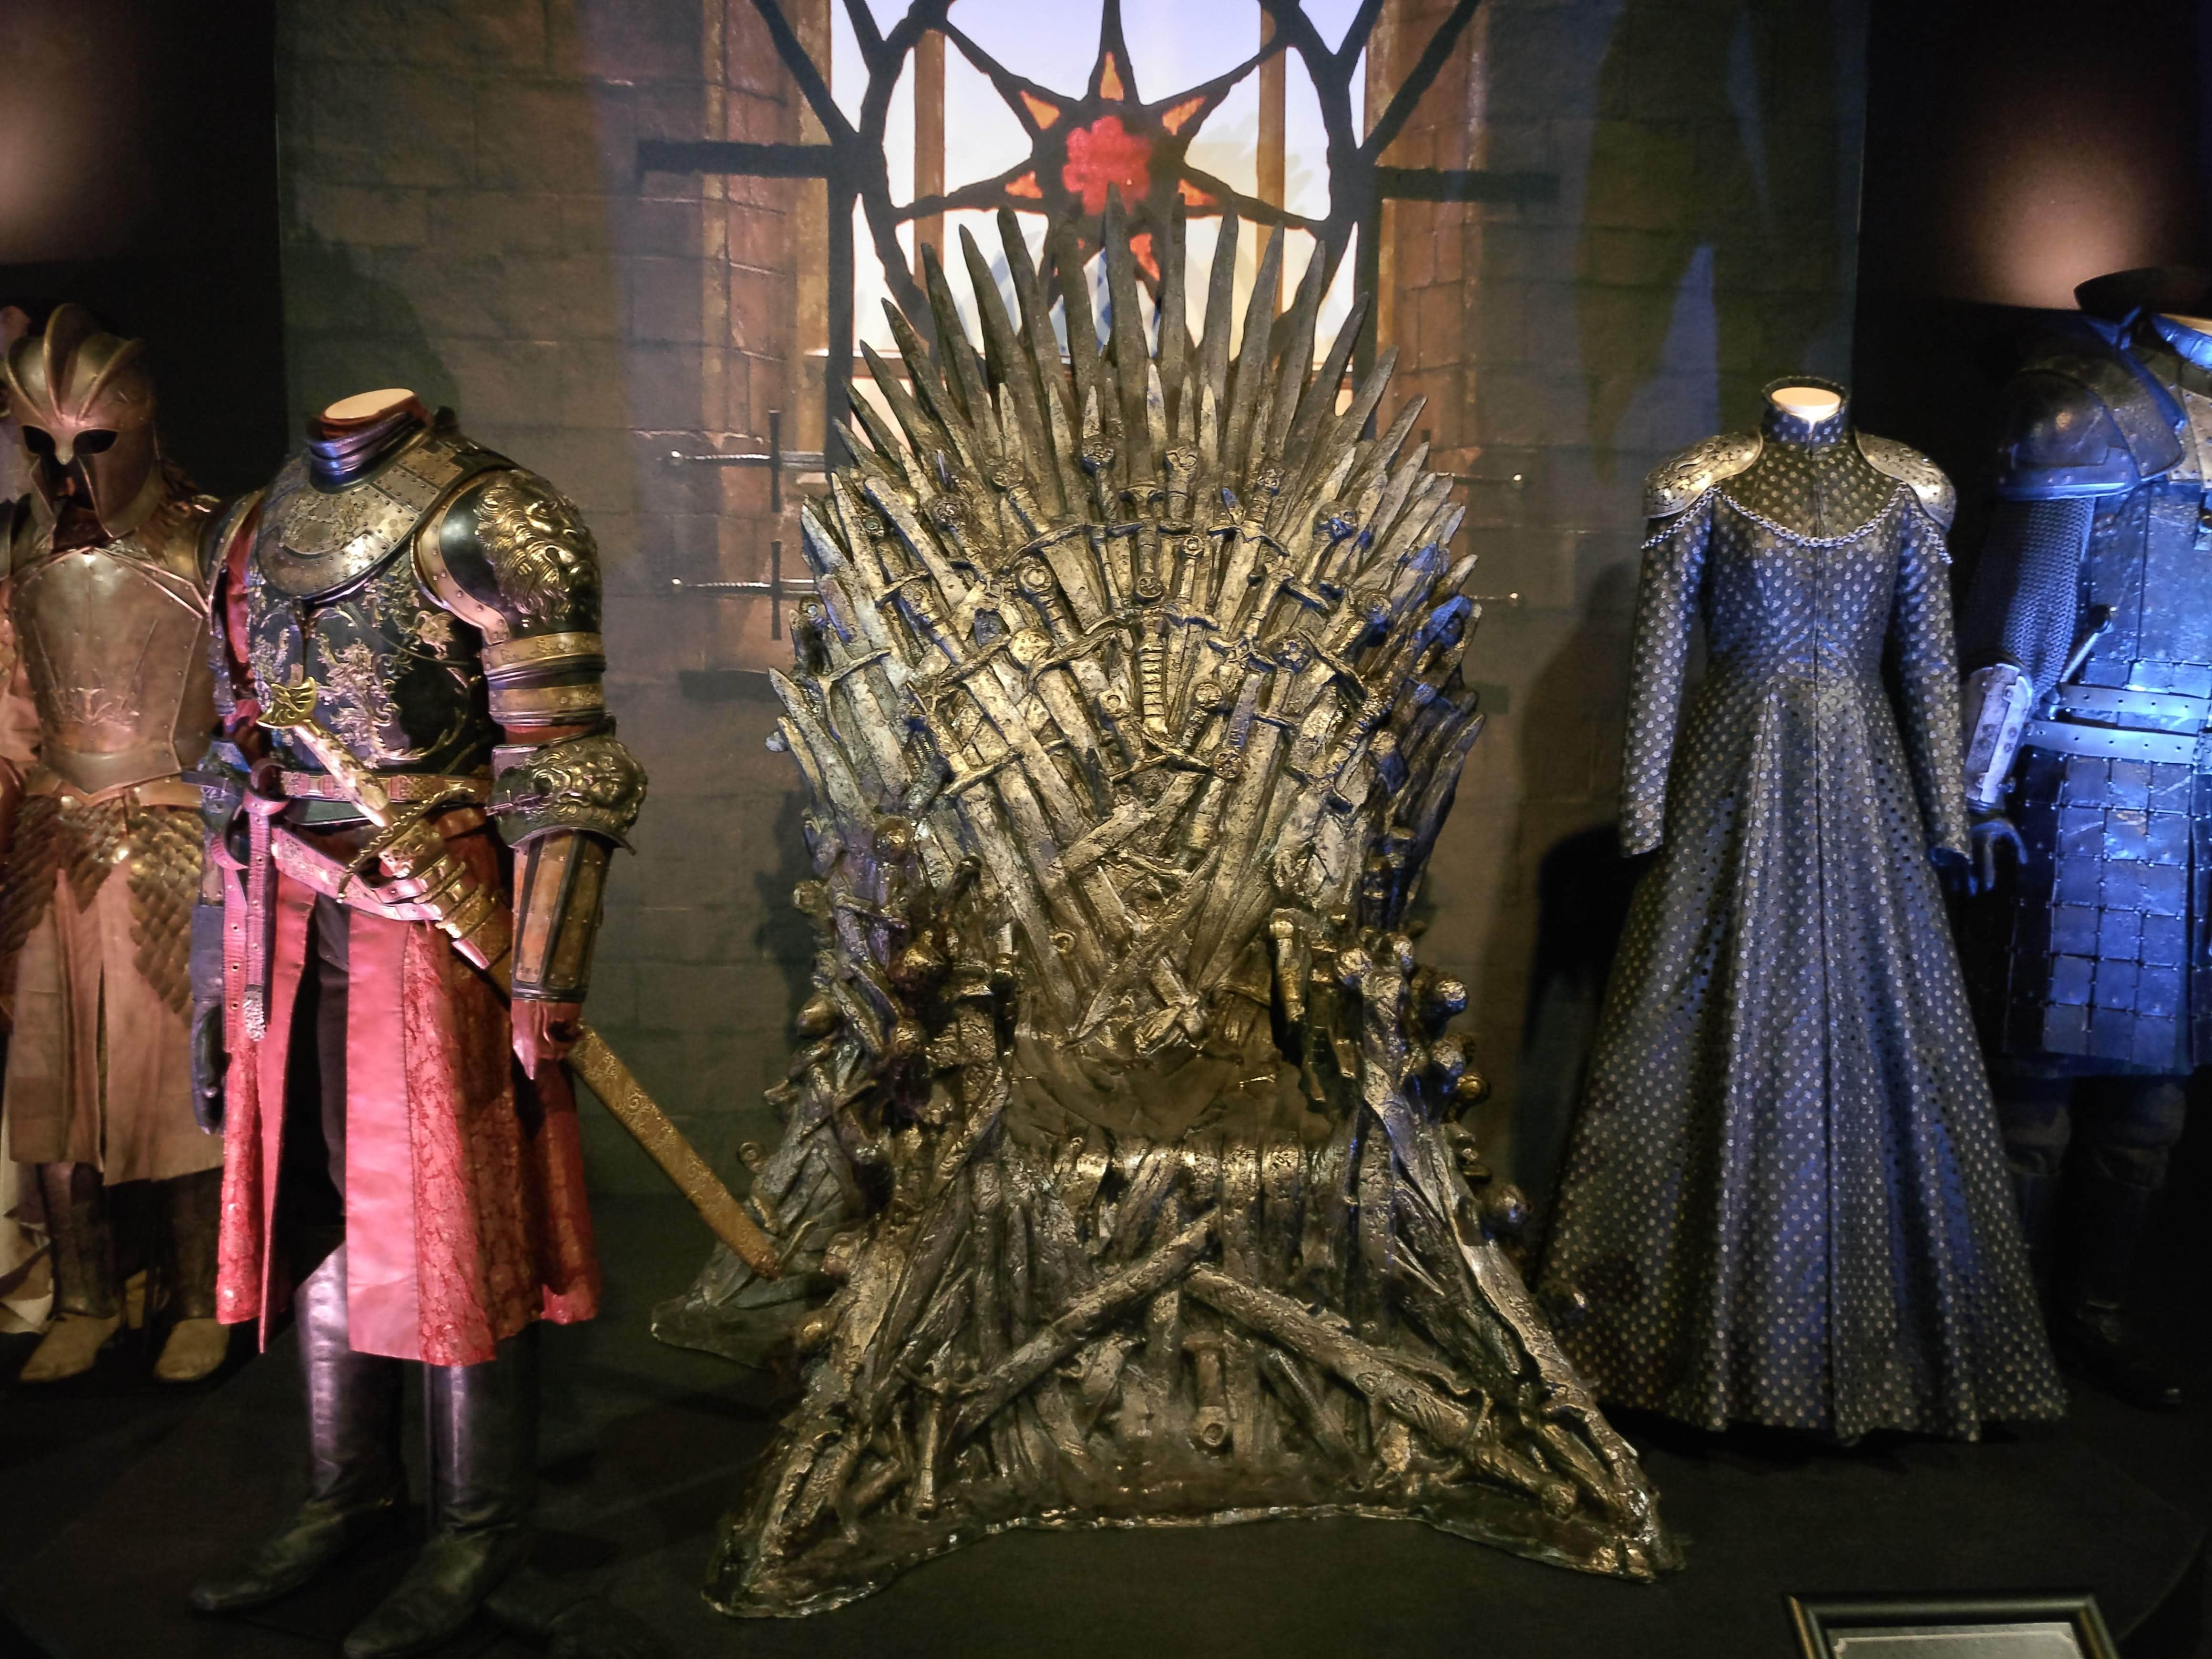 Game of Thrones Exhibition Tour